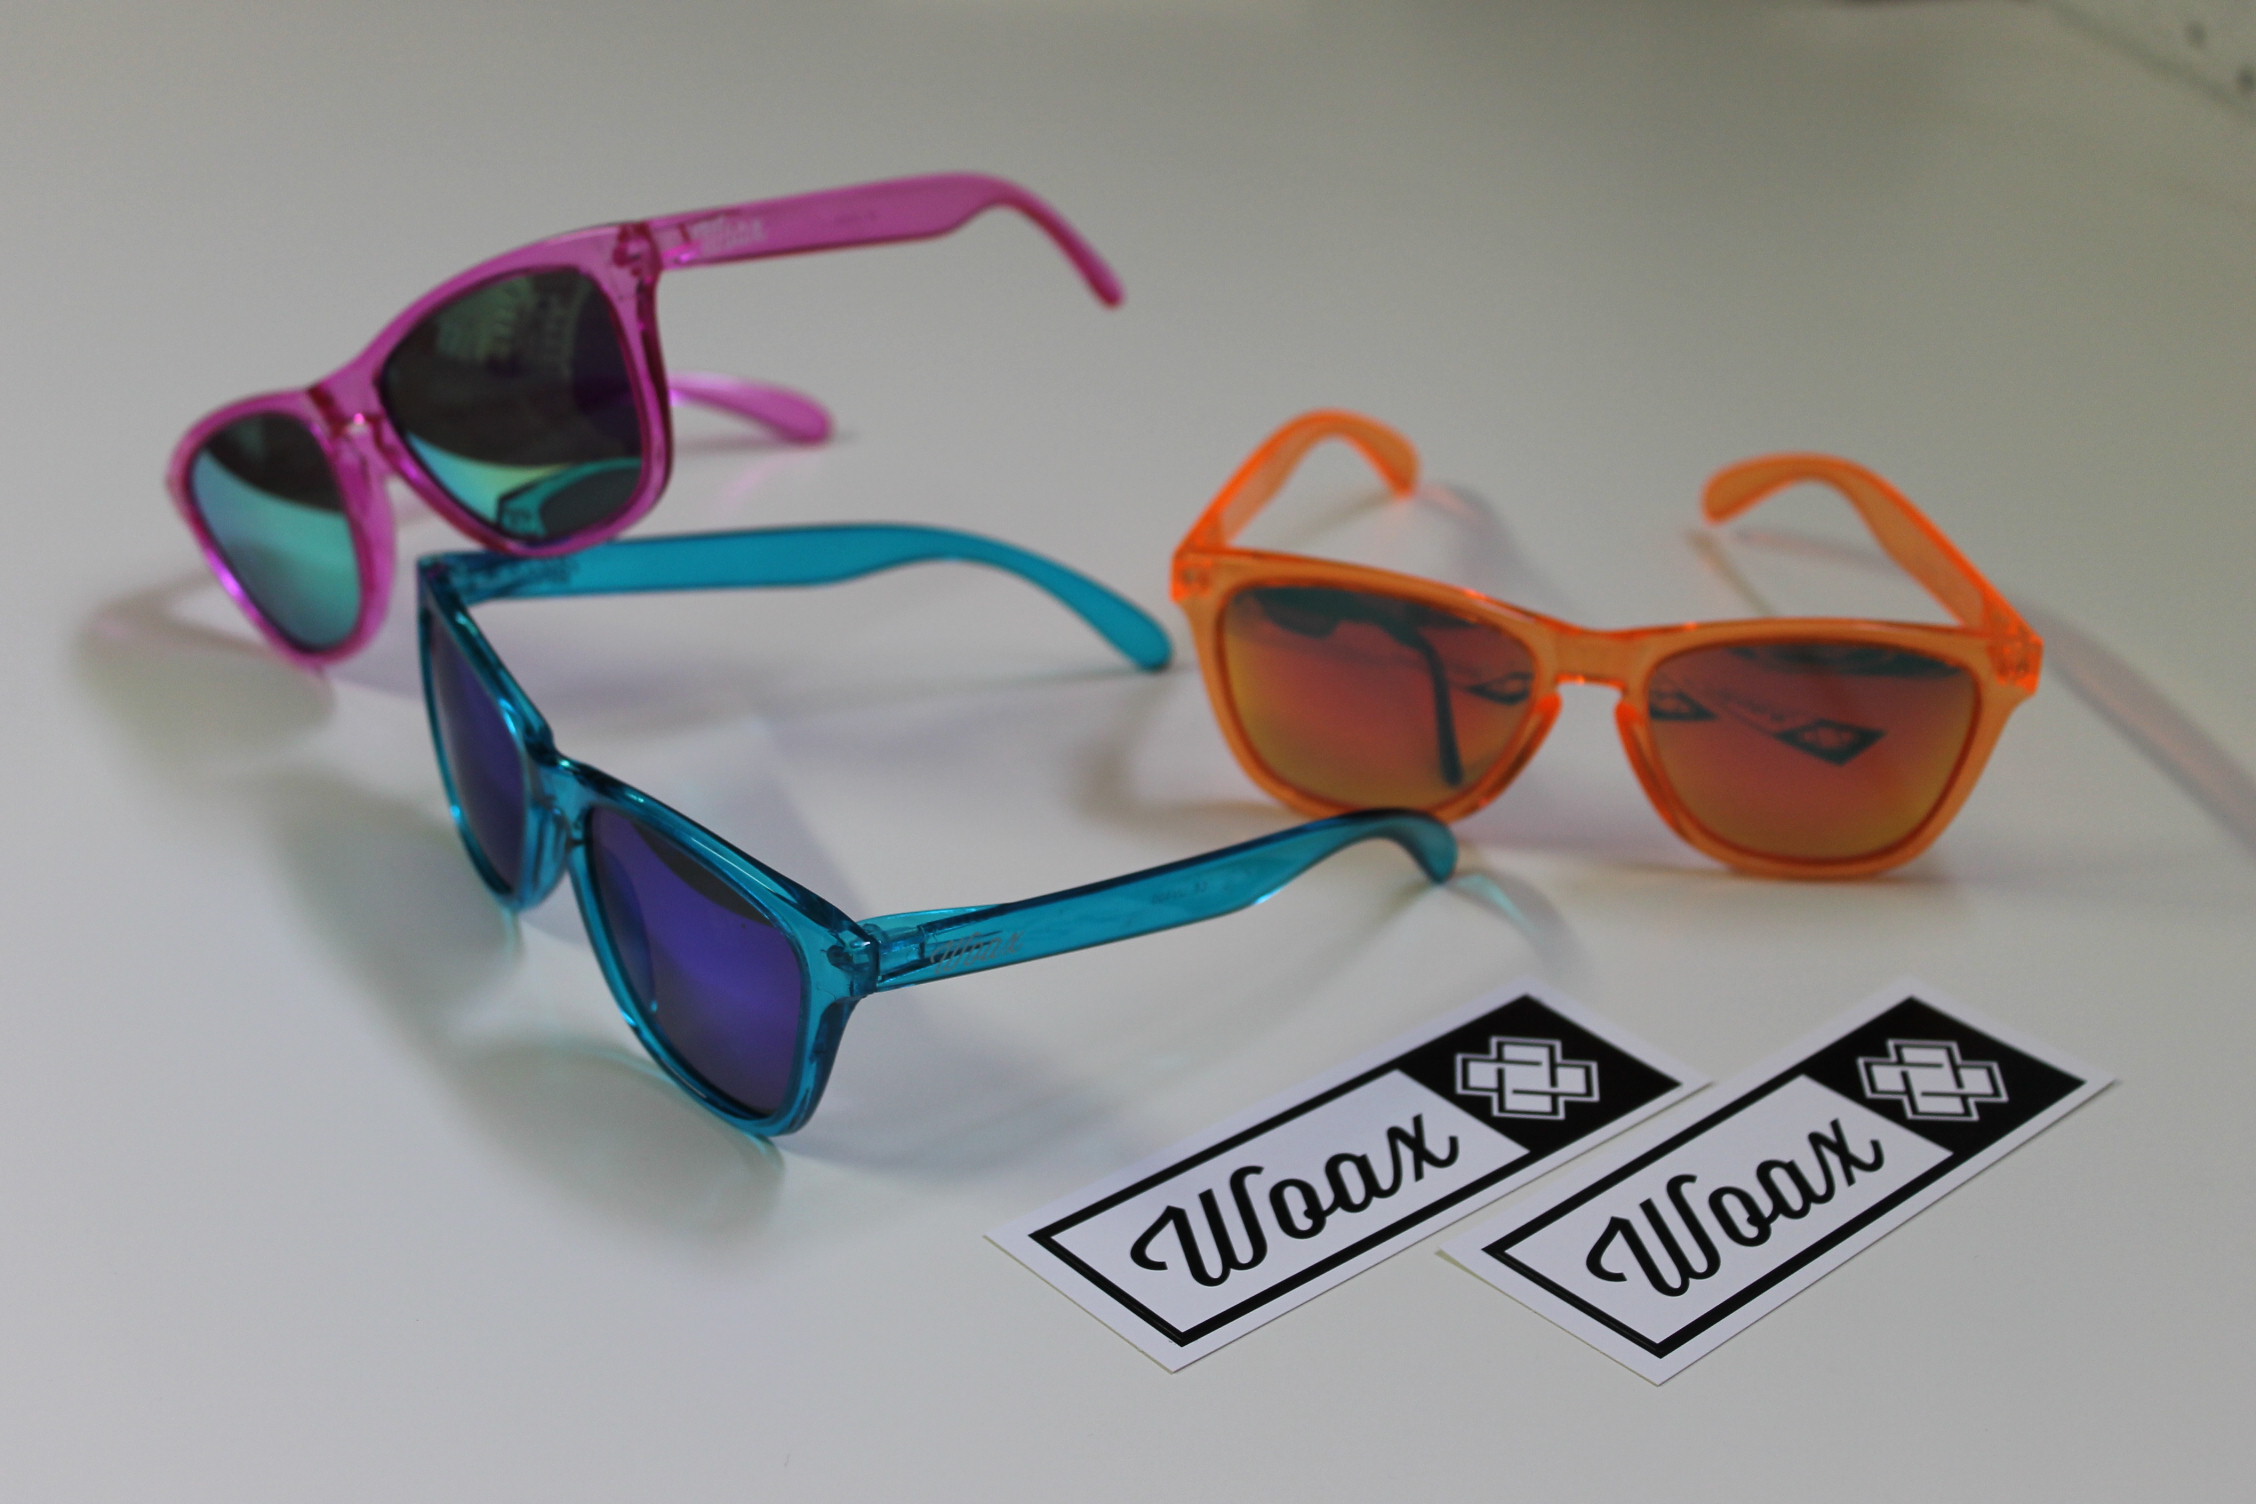 Woax Sunglasses: Caso de éxito en Camaloon B2B